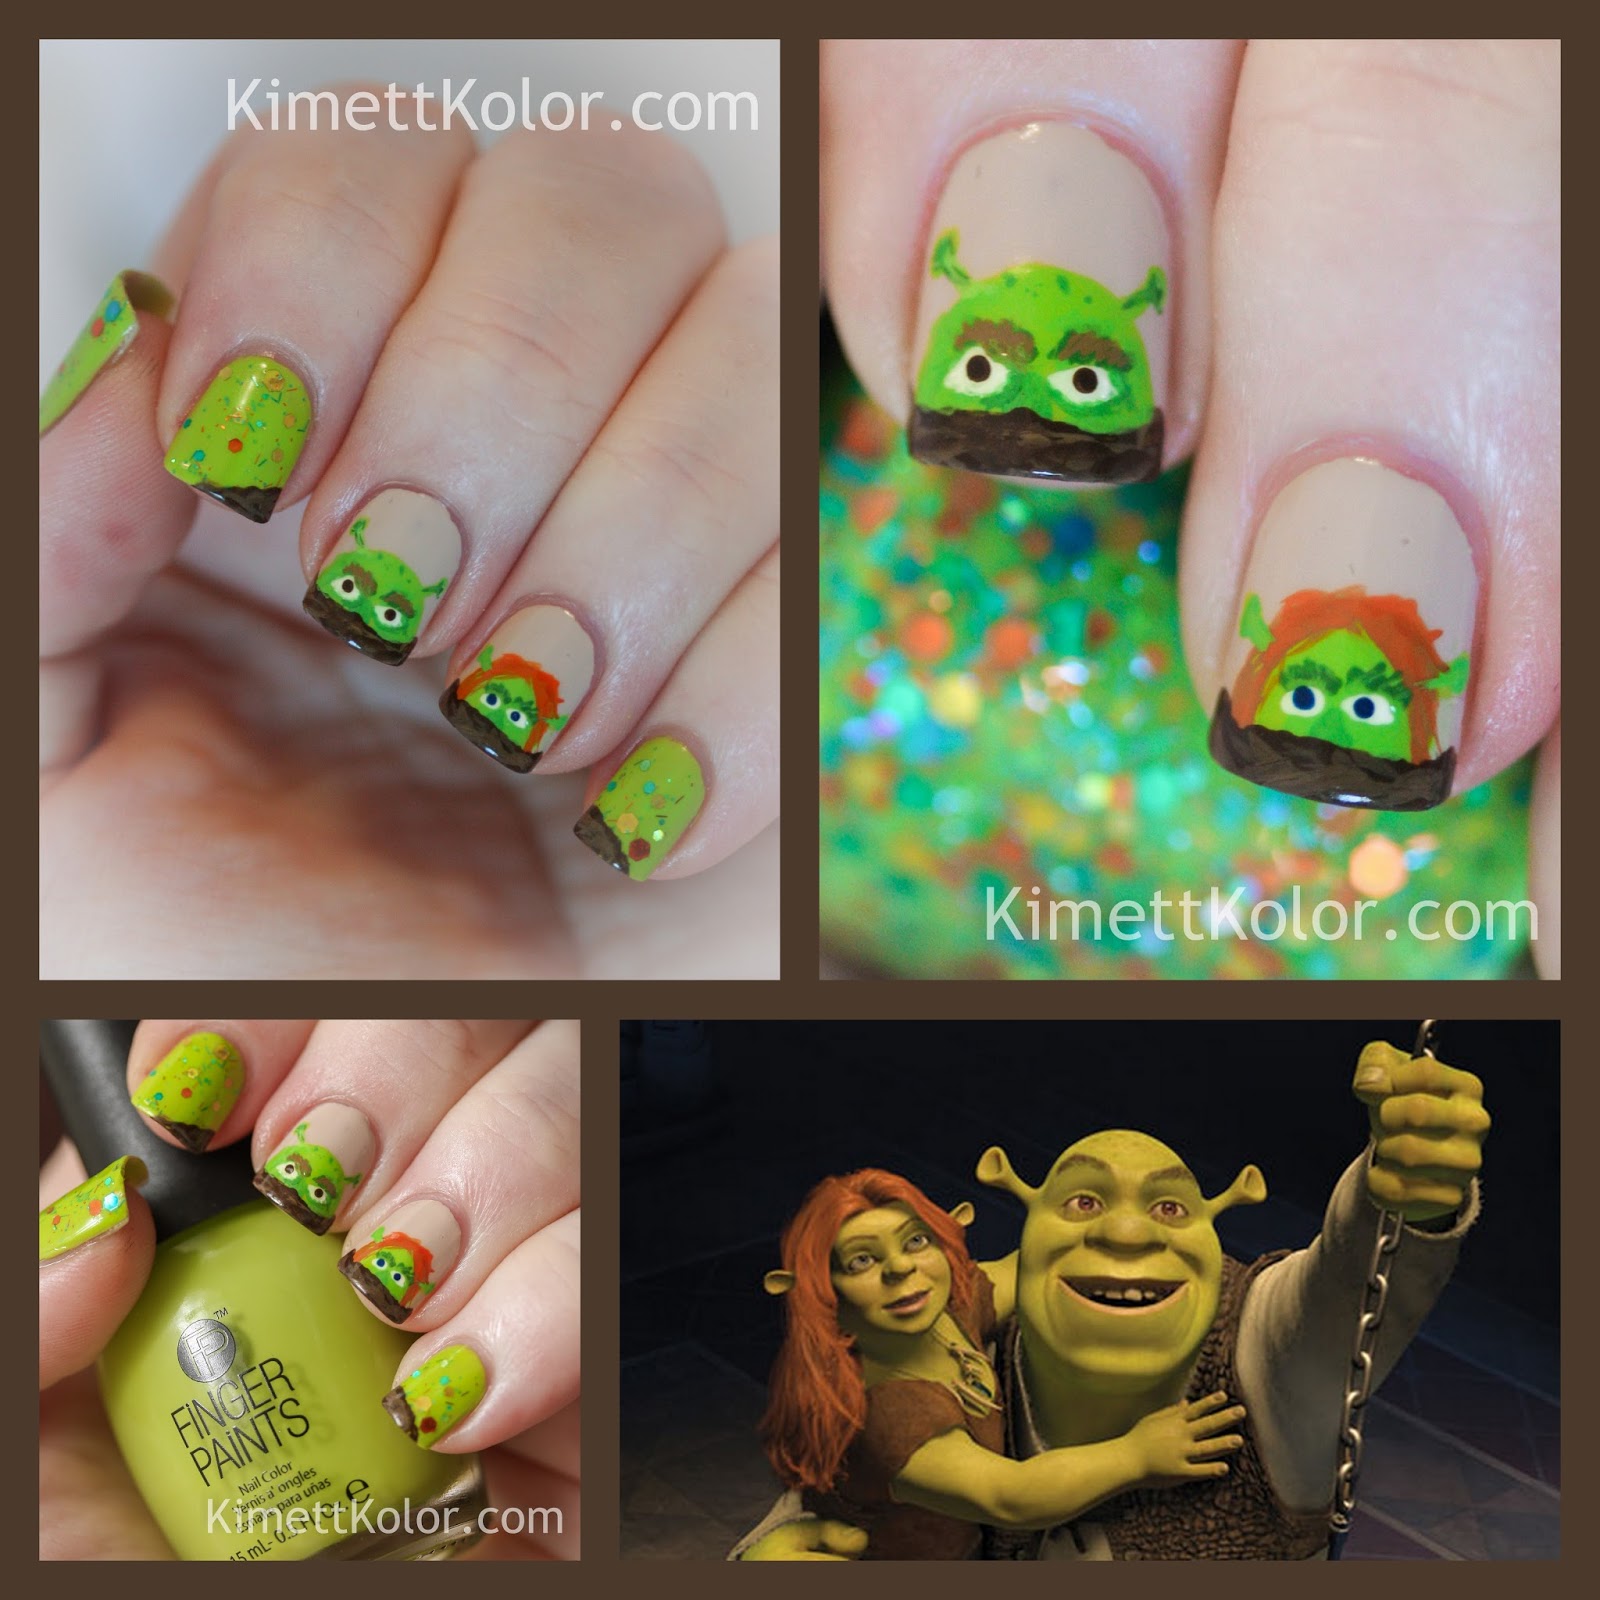 Nail Art of Shrek and Fiona